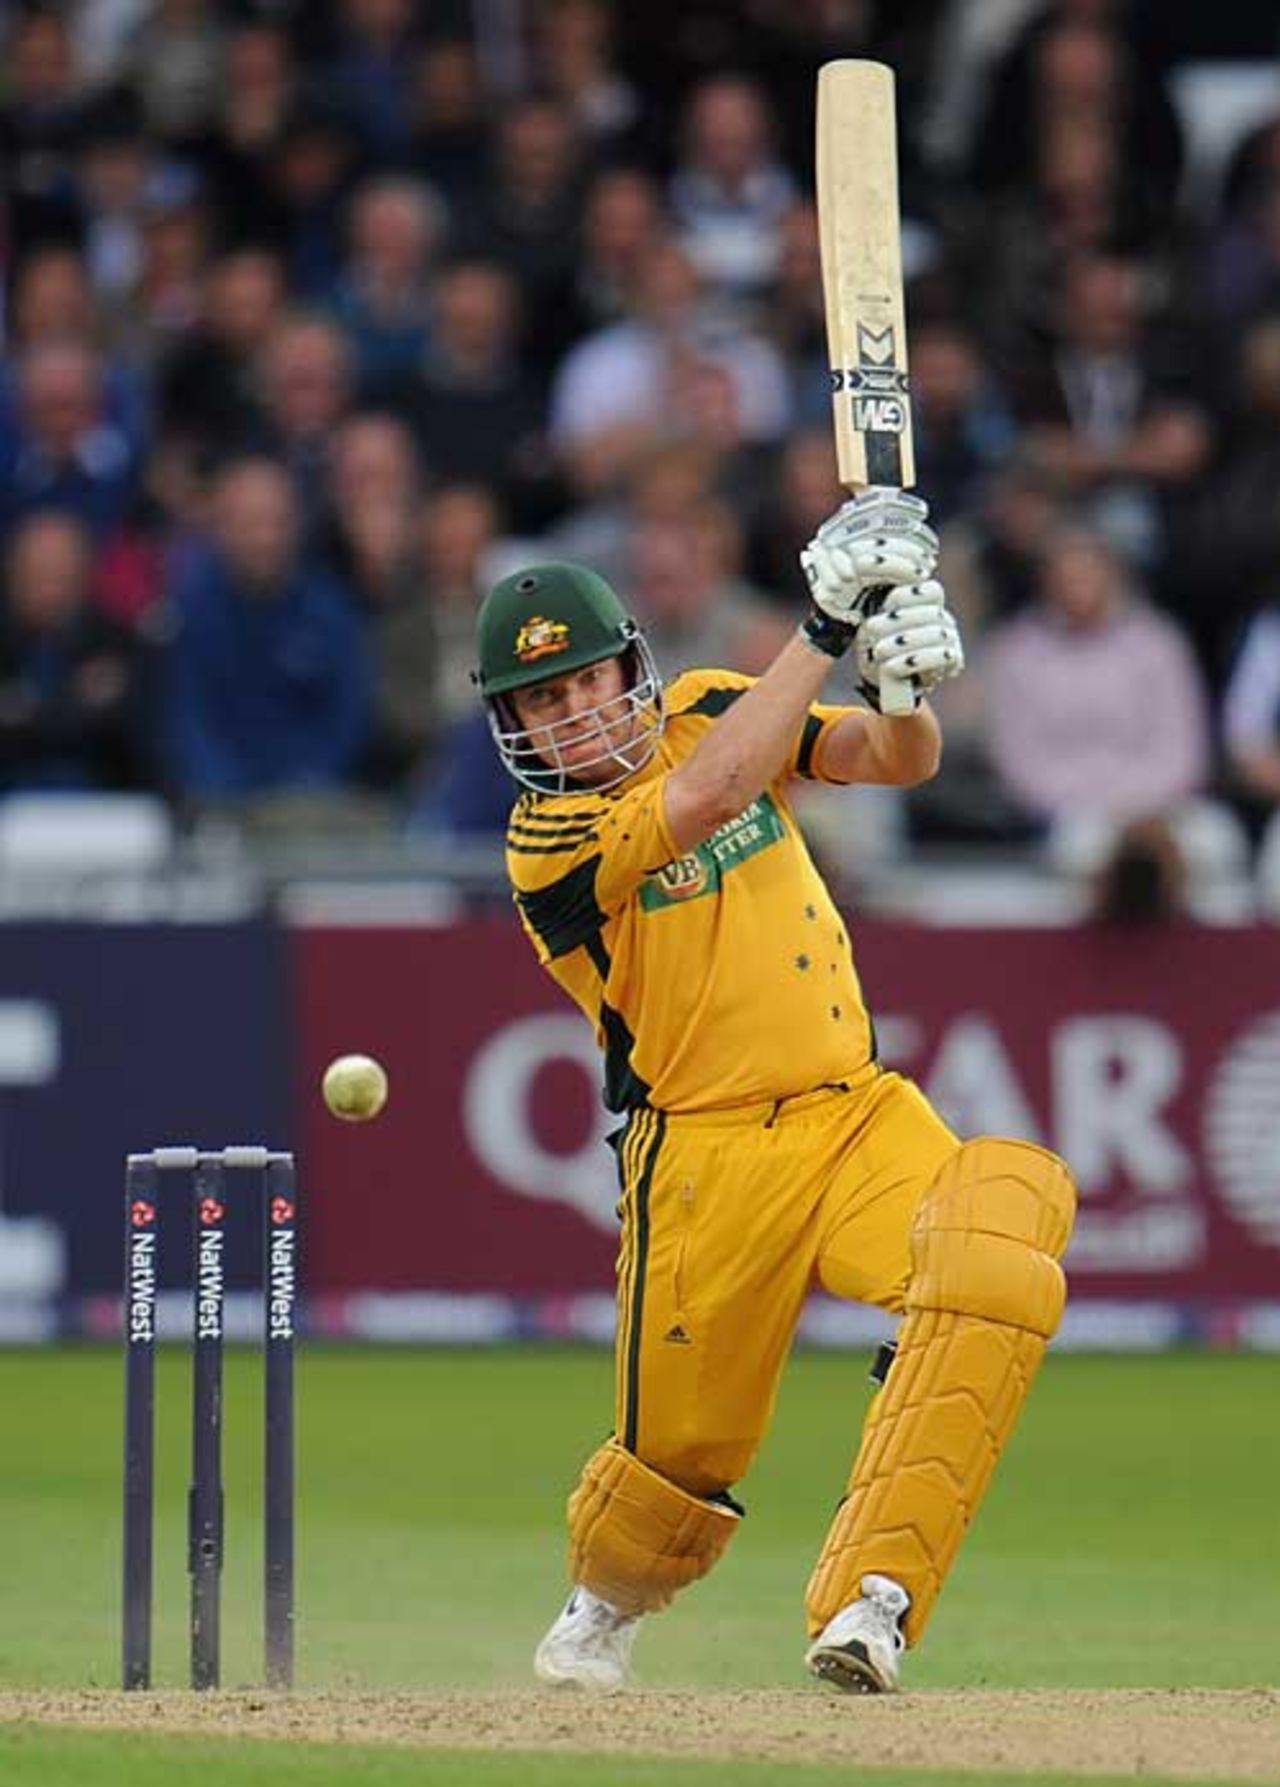 James Hopes hit a quickfire 38 from 22 balls, England v Australia, 6th ODI, Trent Bridge, September 17, 2009